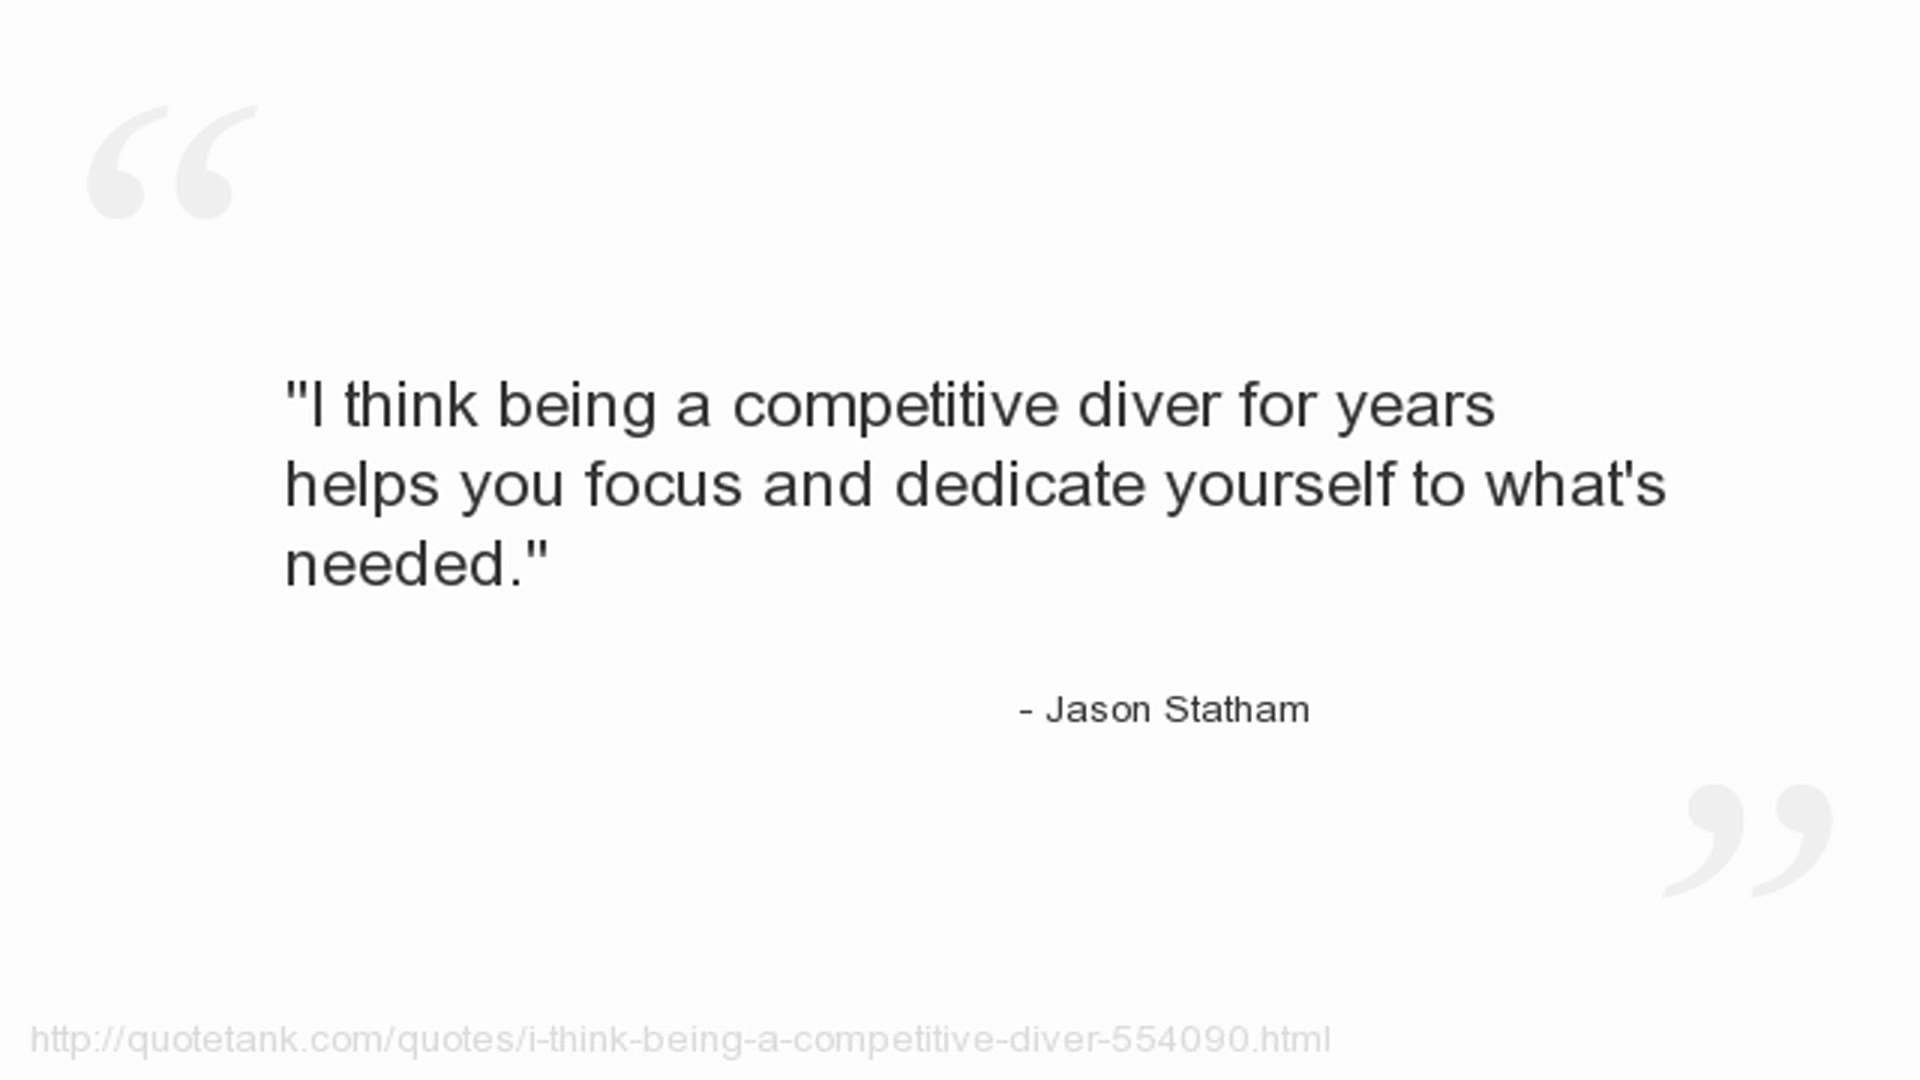 Jason Statham's quote #3